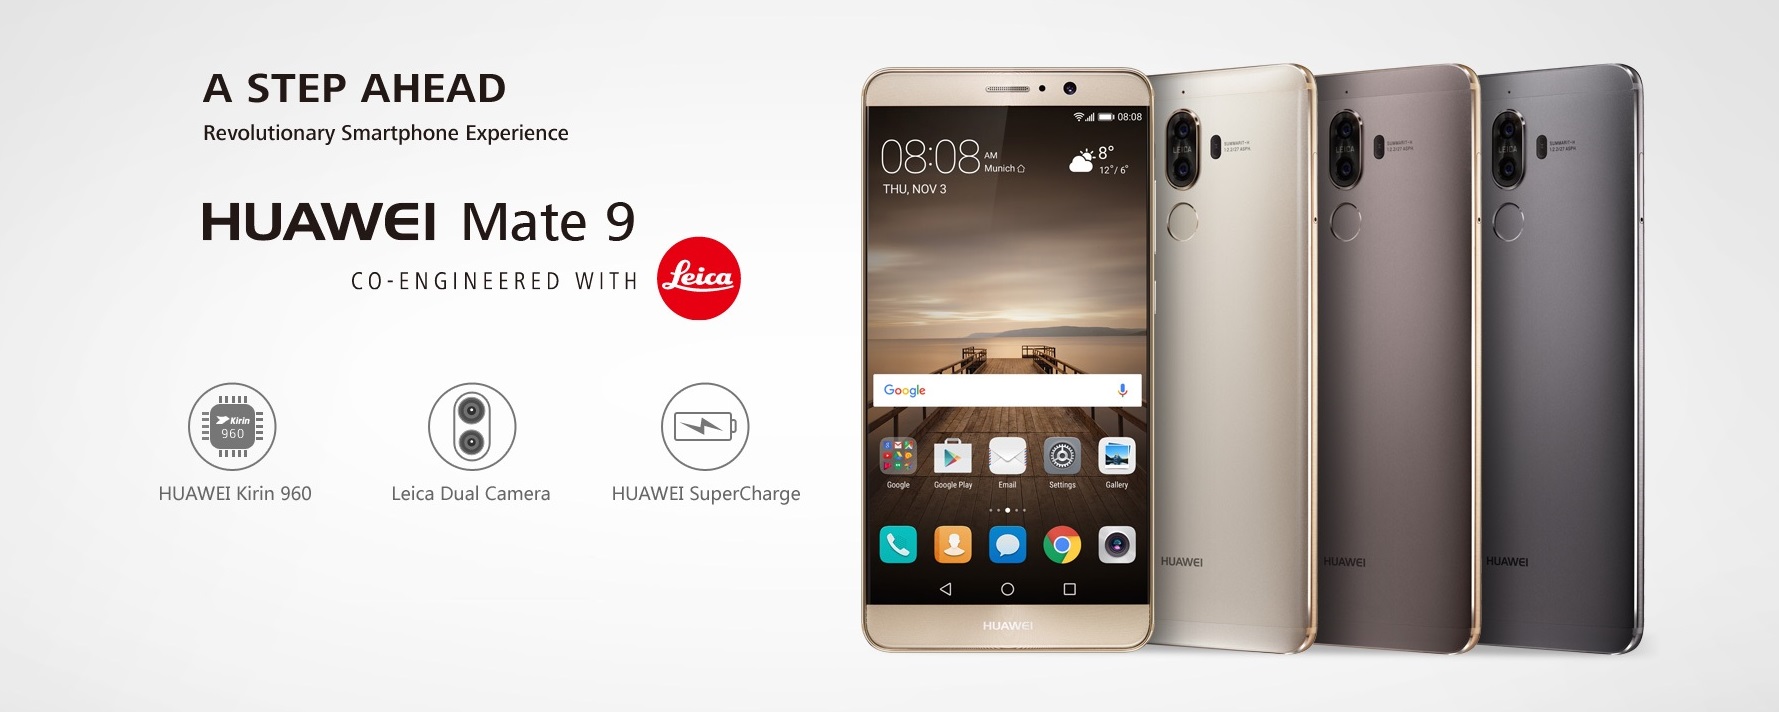 Huawei Mate 10 ciddi manada iPhone 8 ile rekabet edecek